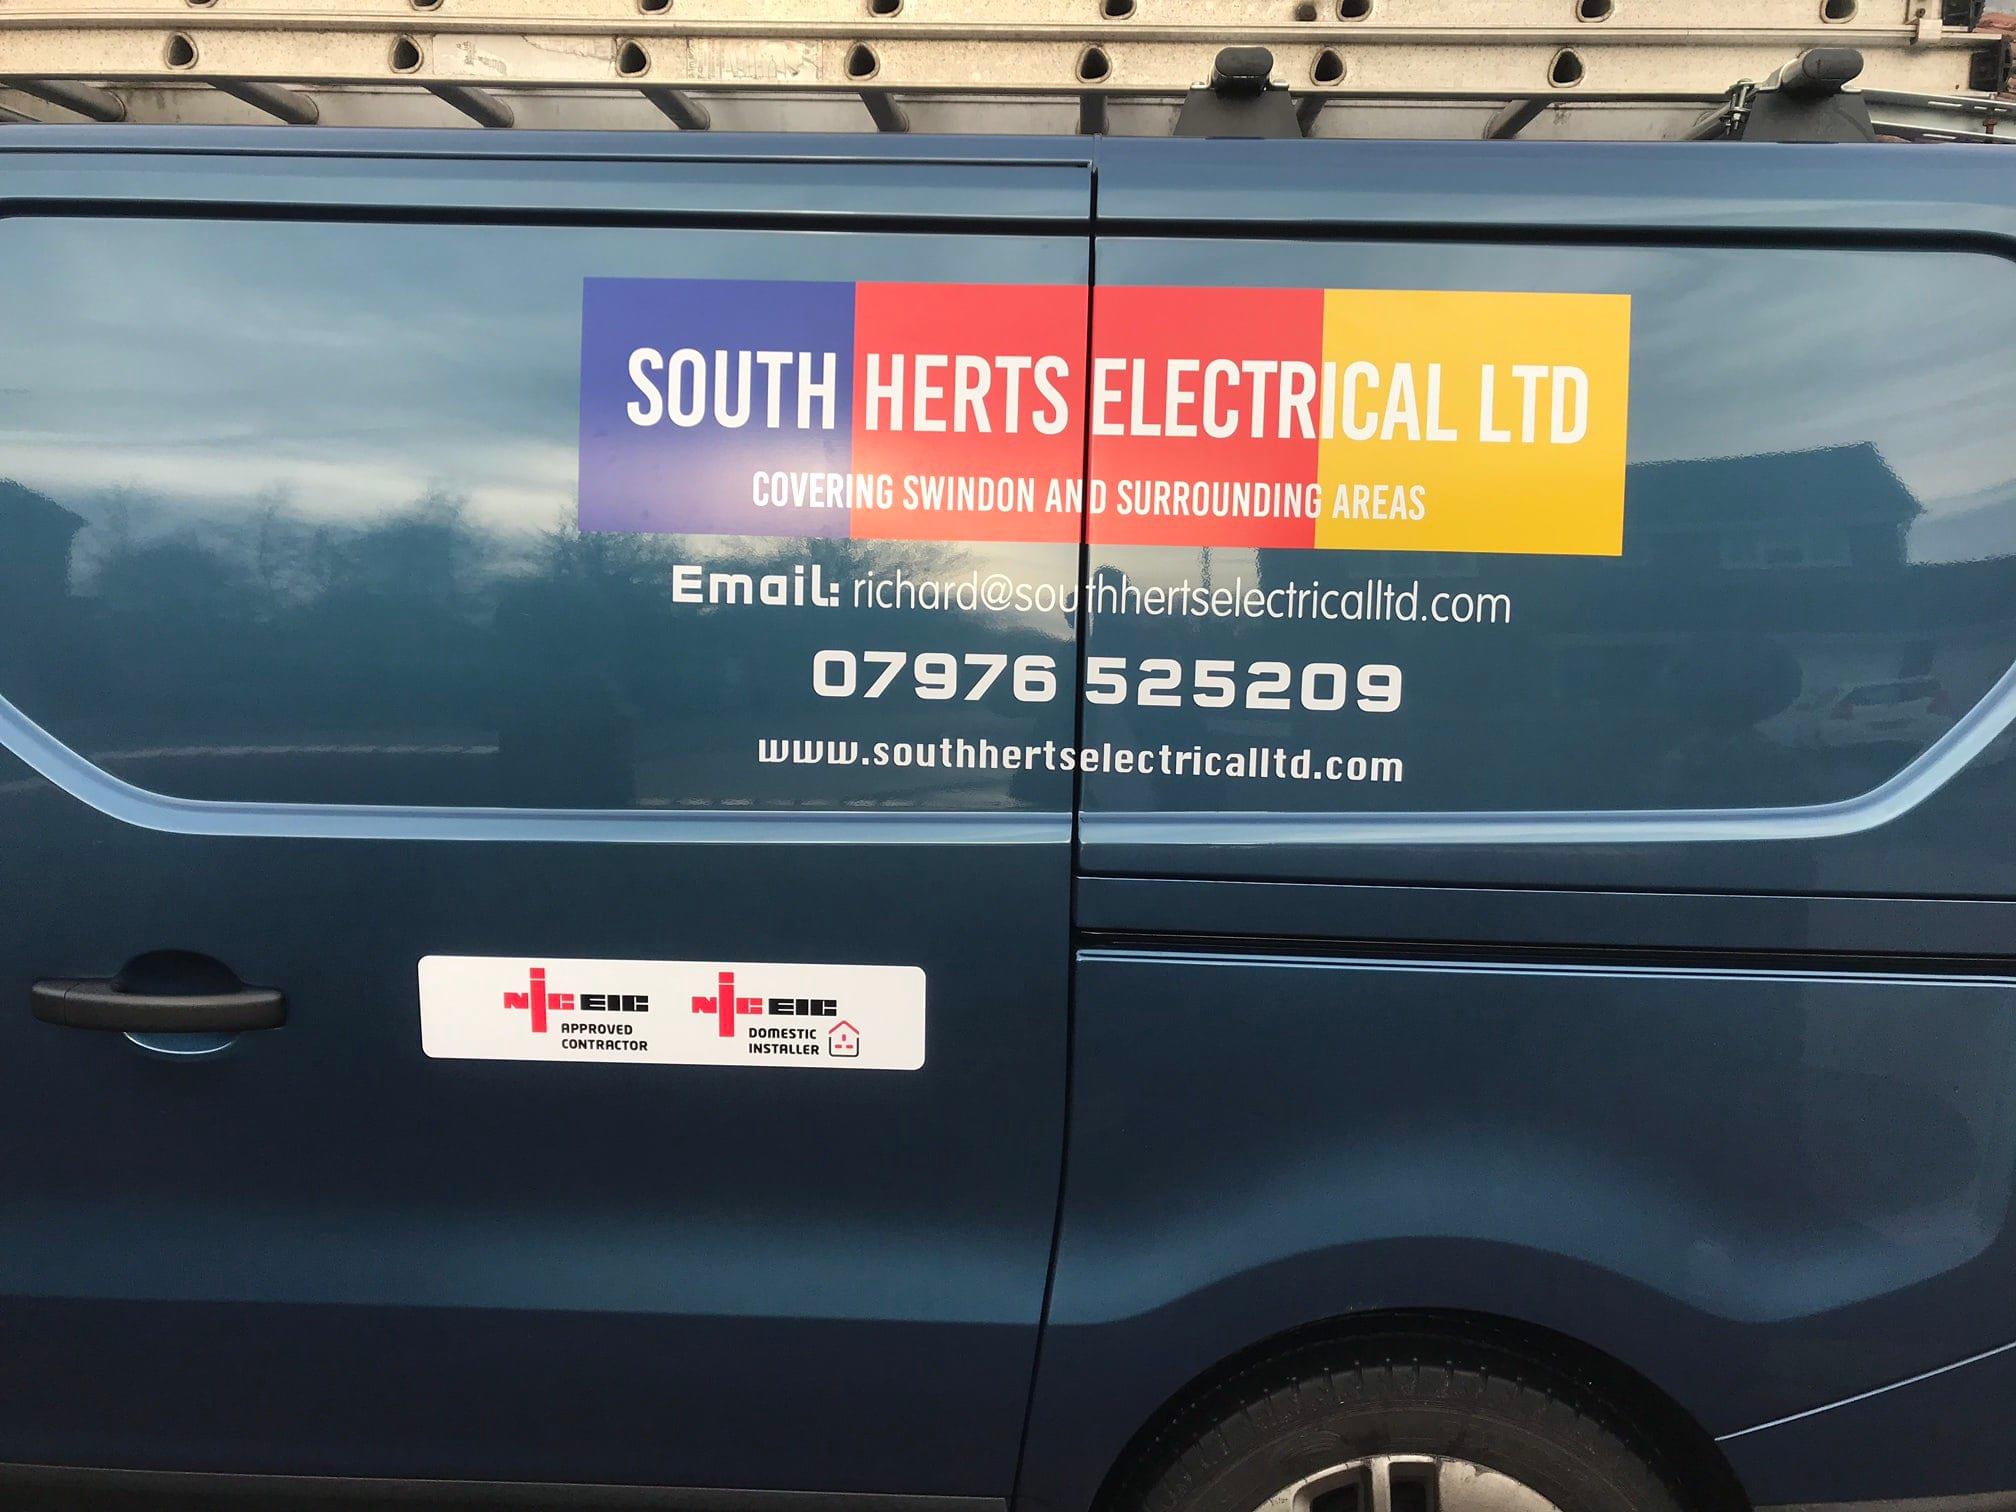 South Herts Electrical Ltd Swindon 07976 525209